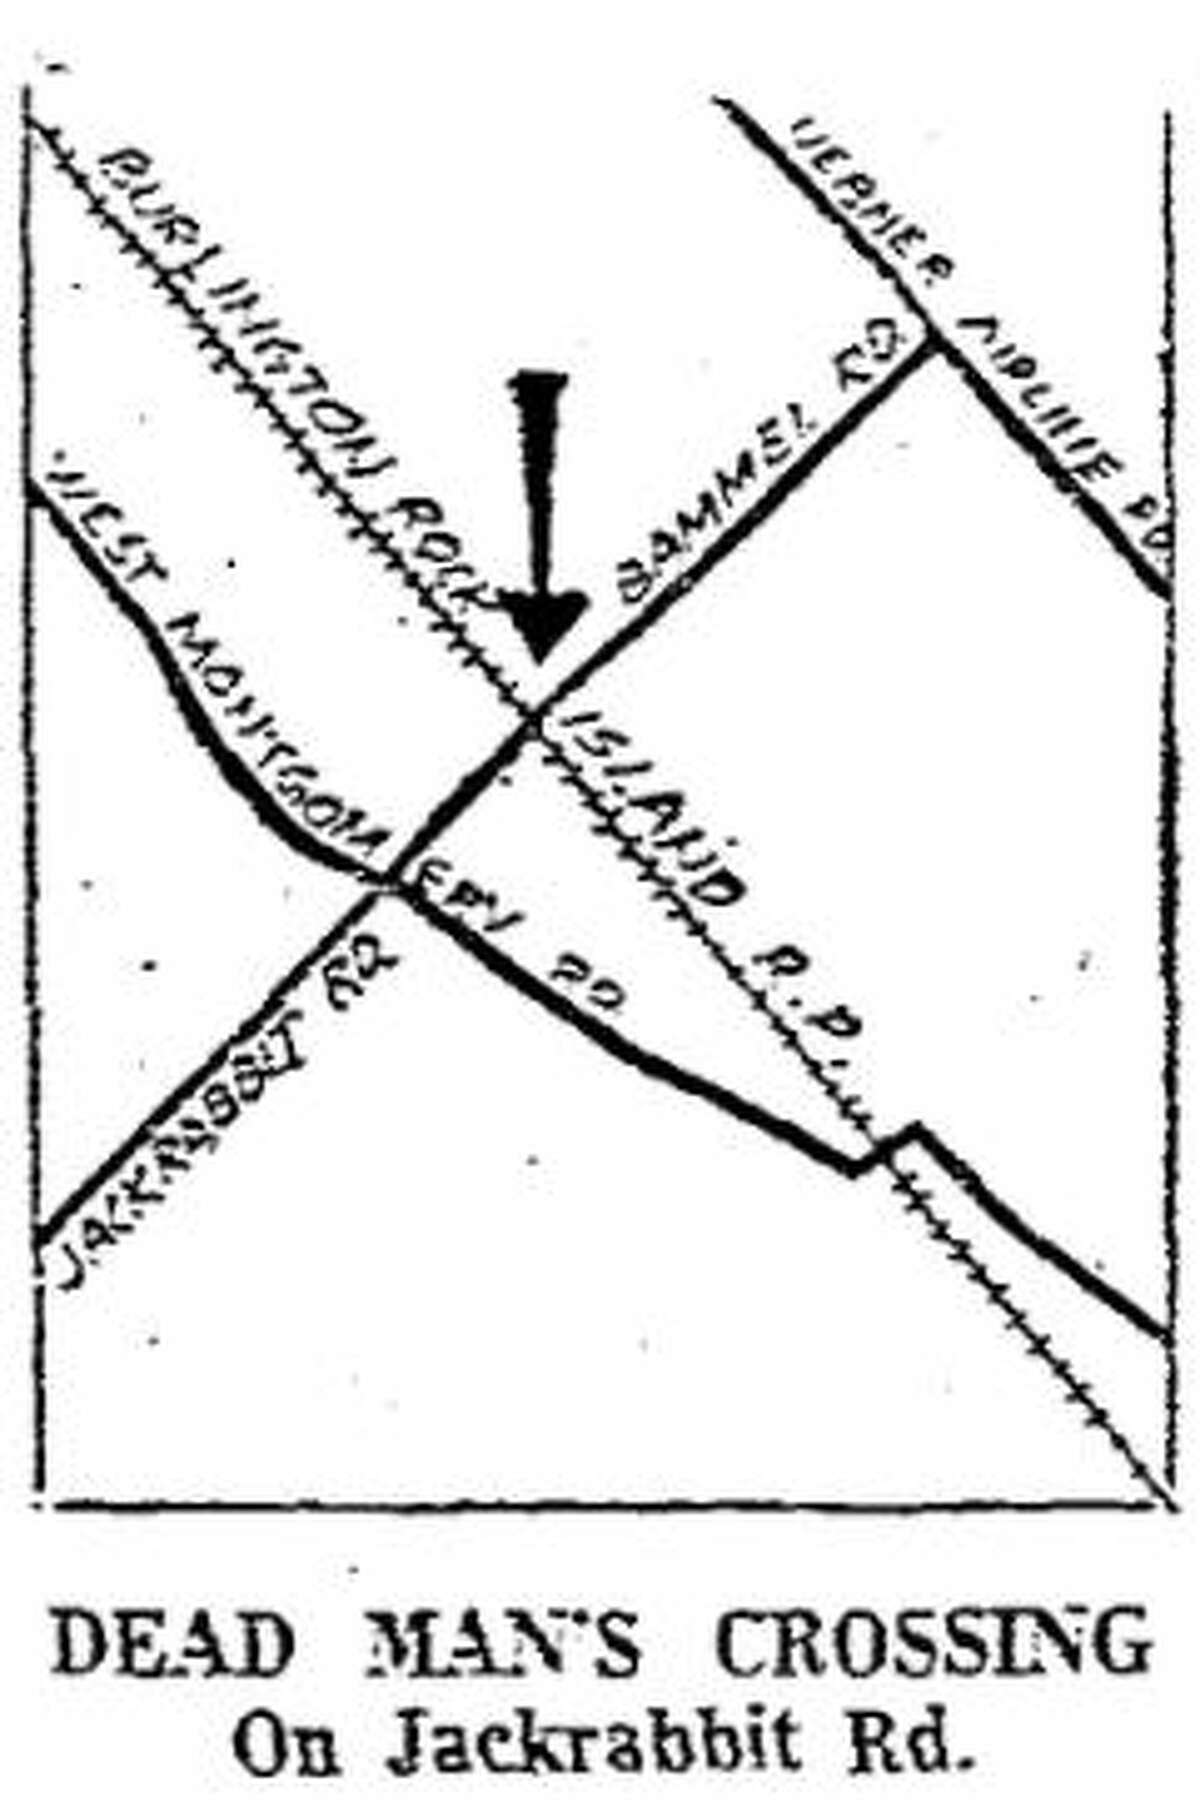 1959 illustration of "Dead Man's Crossing" in northwest Harris County.